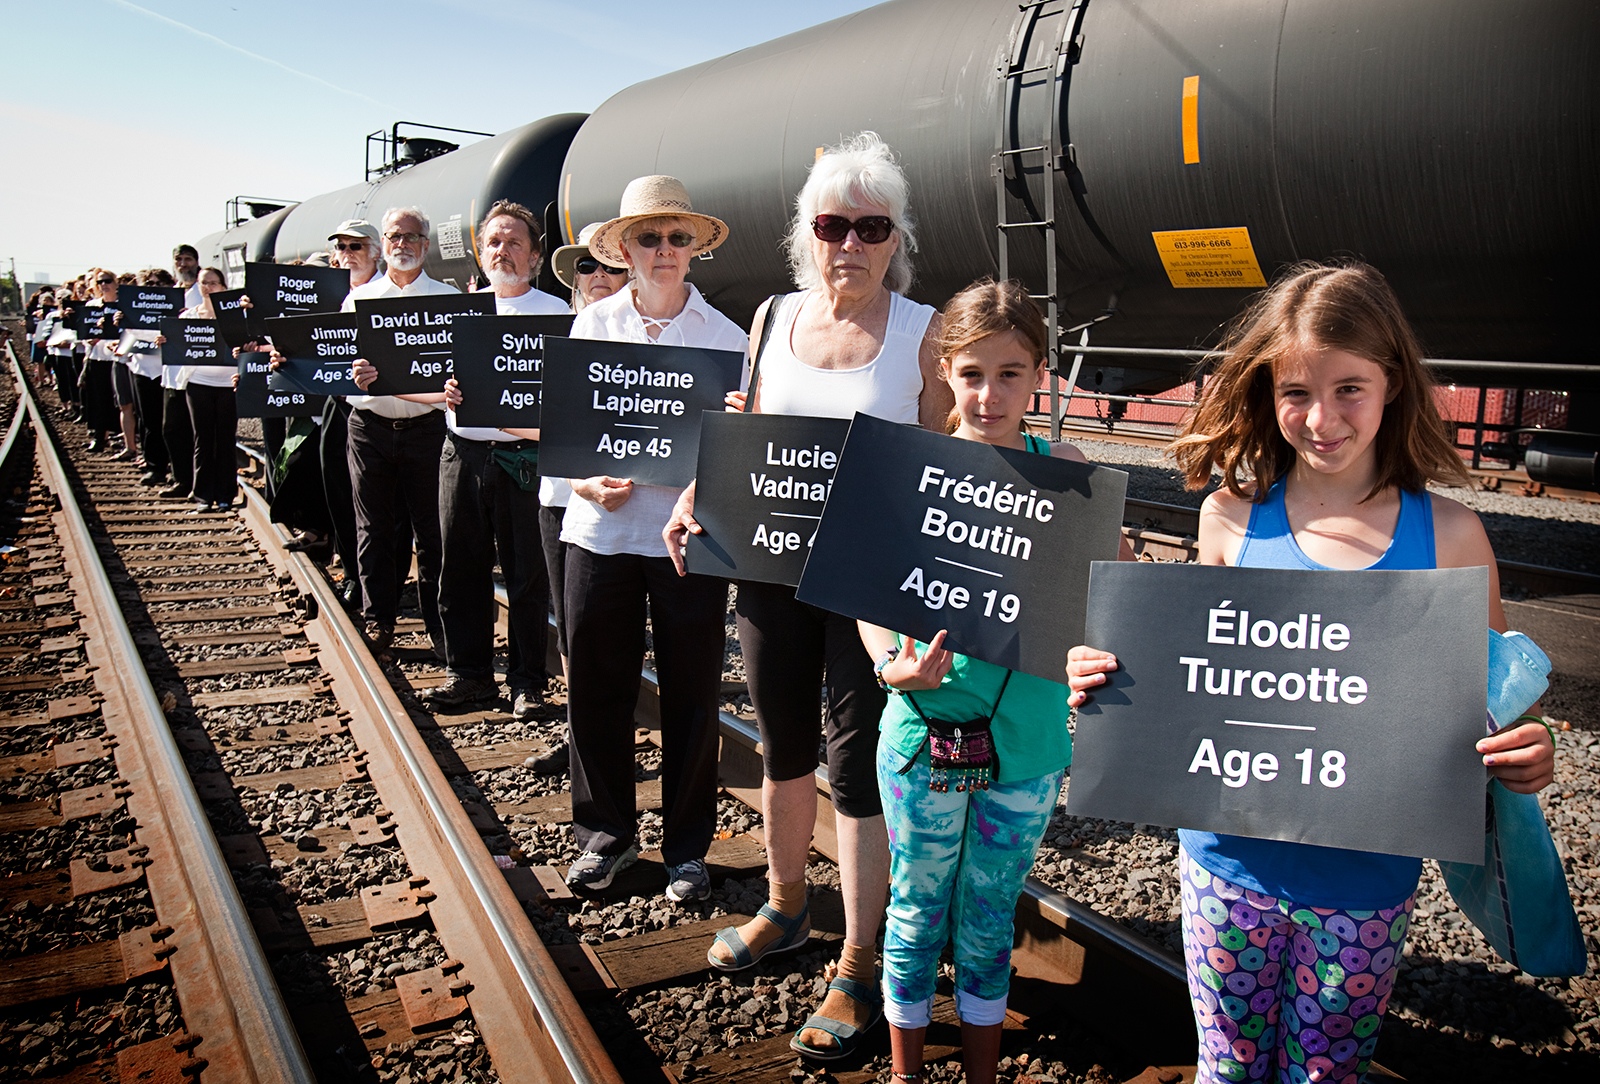 Vancouver Tesoro Savage Oil Terminal, oil train blockades, climate protests, Jay Inslee, Vancouver oil train protest, Bakken crude